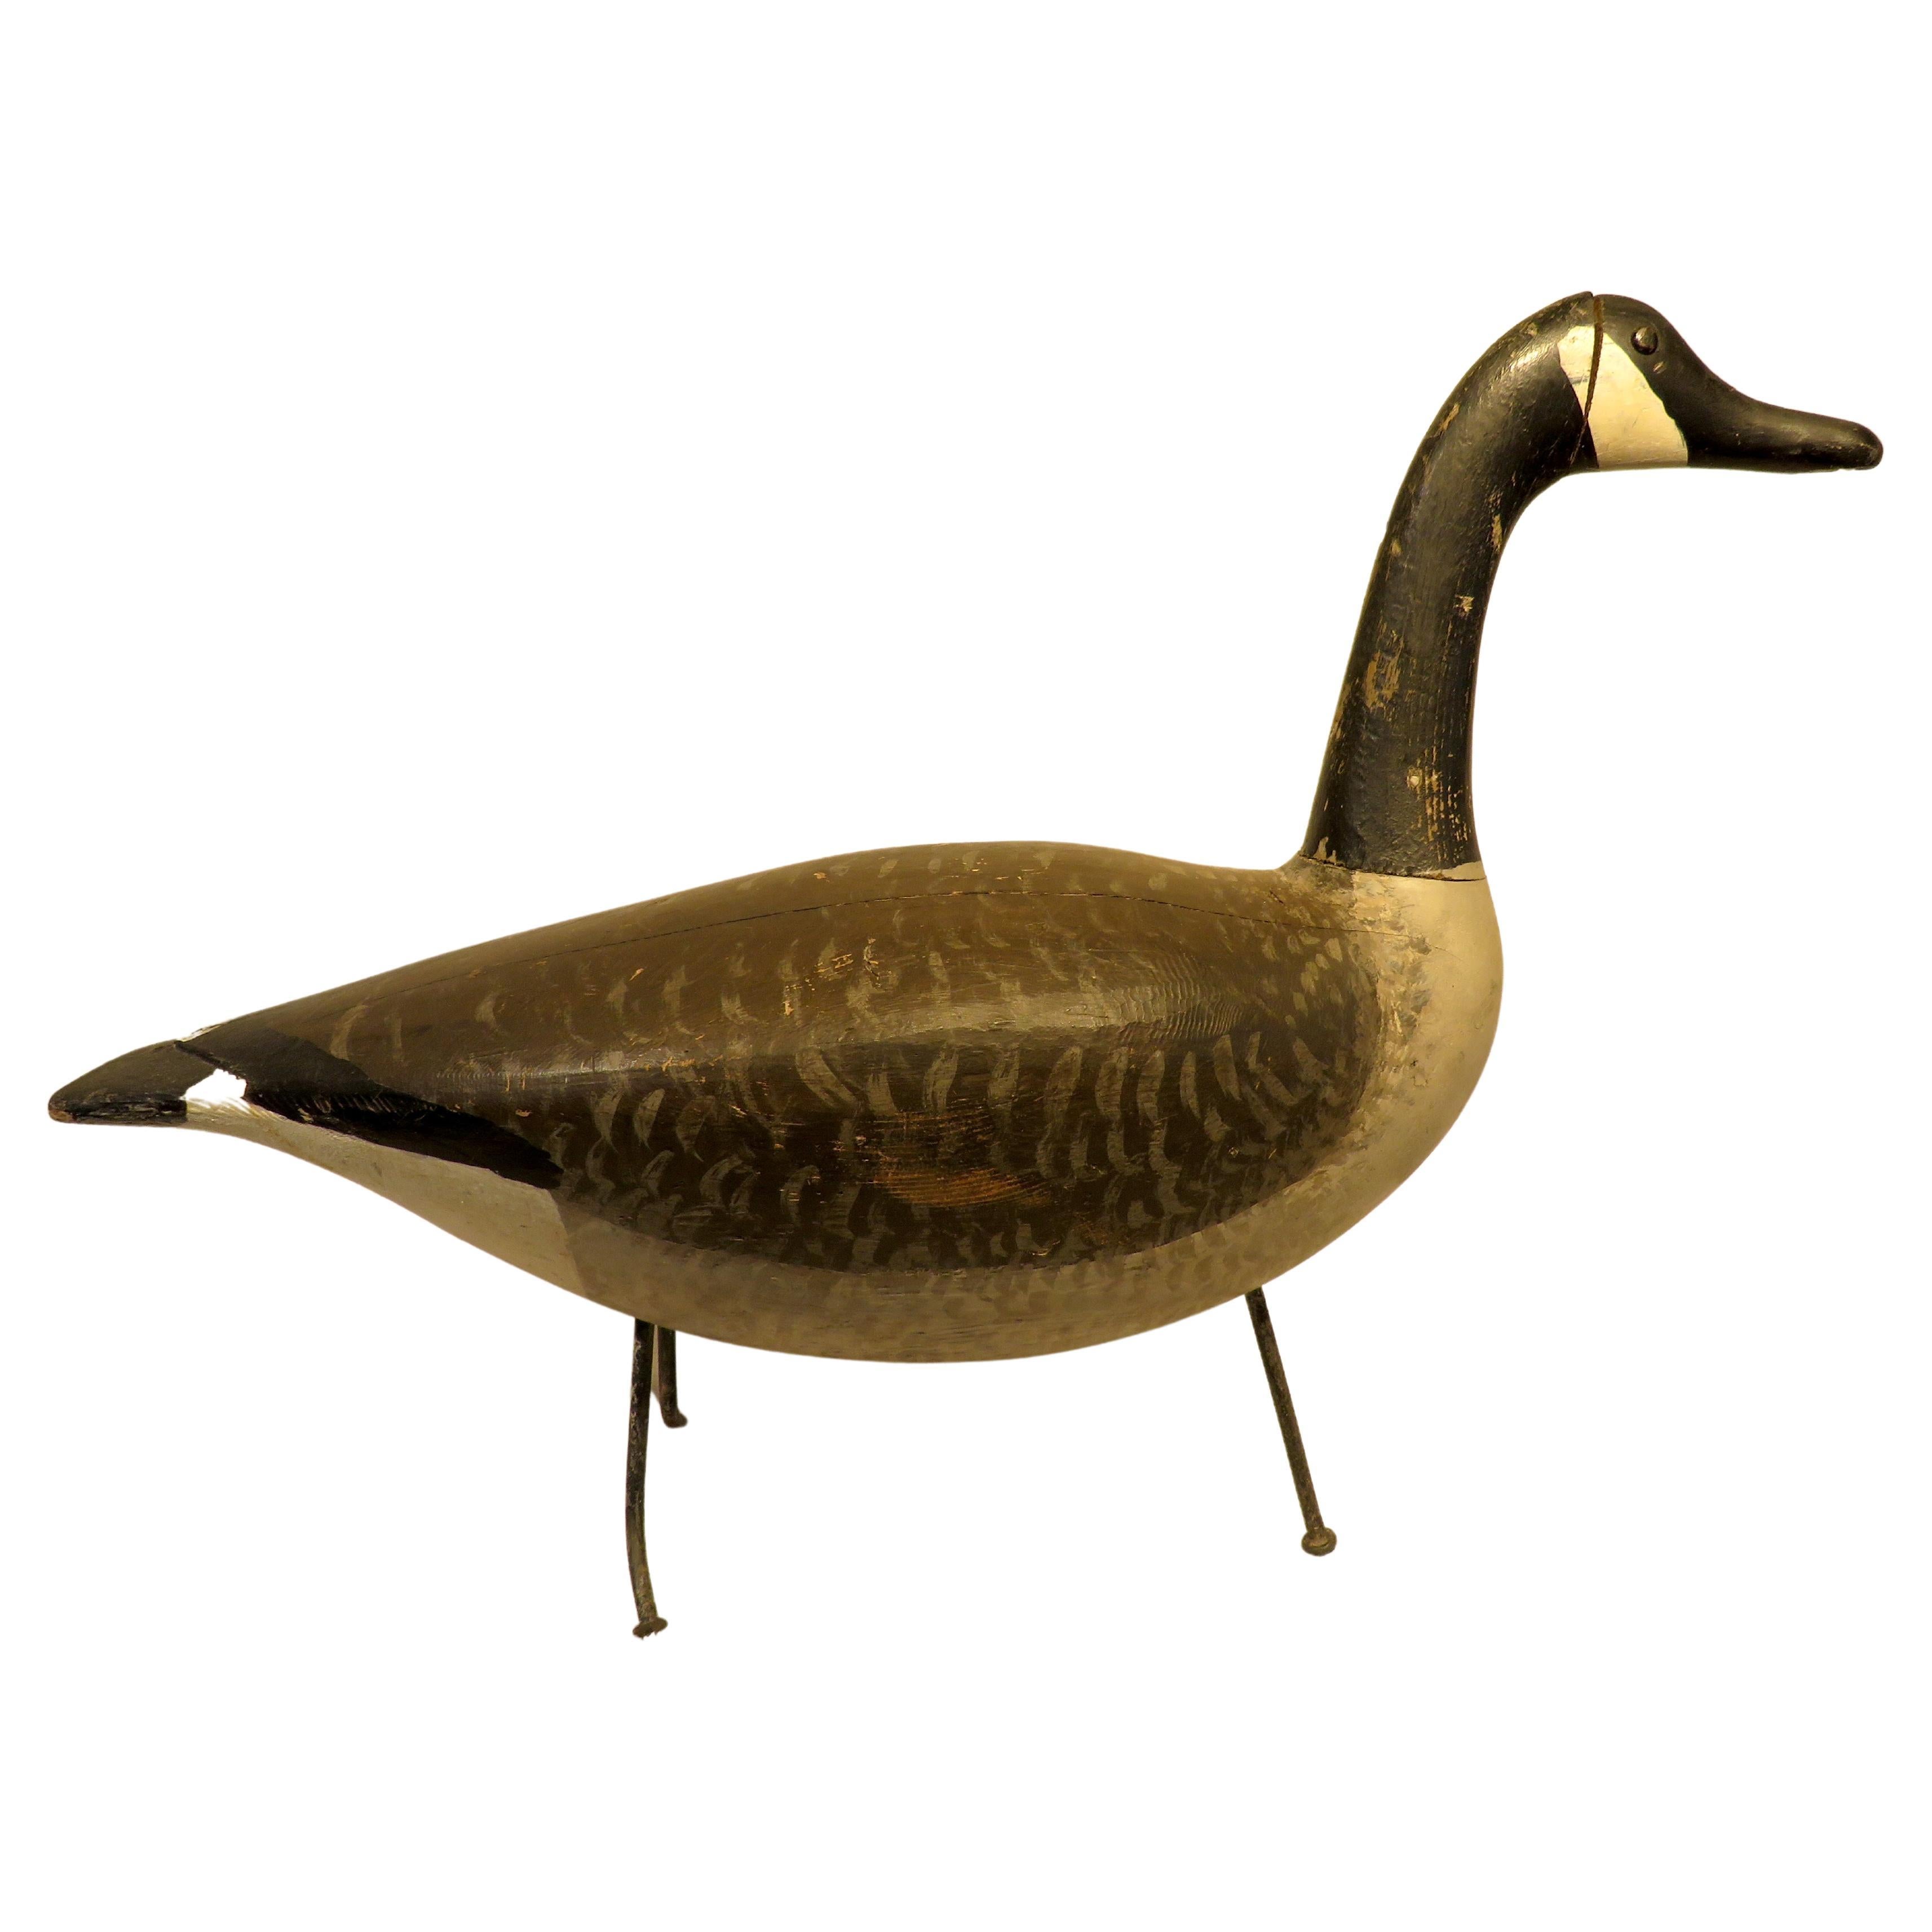 Vintage Canada Goose Decoy For Sale